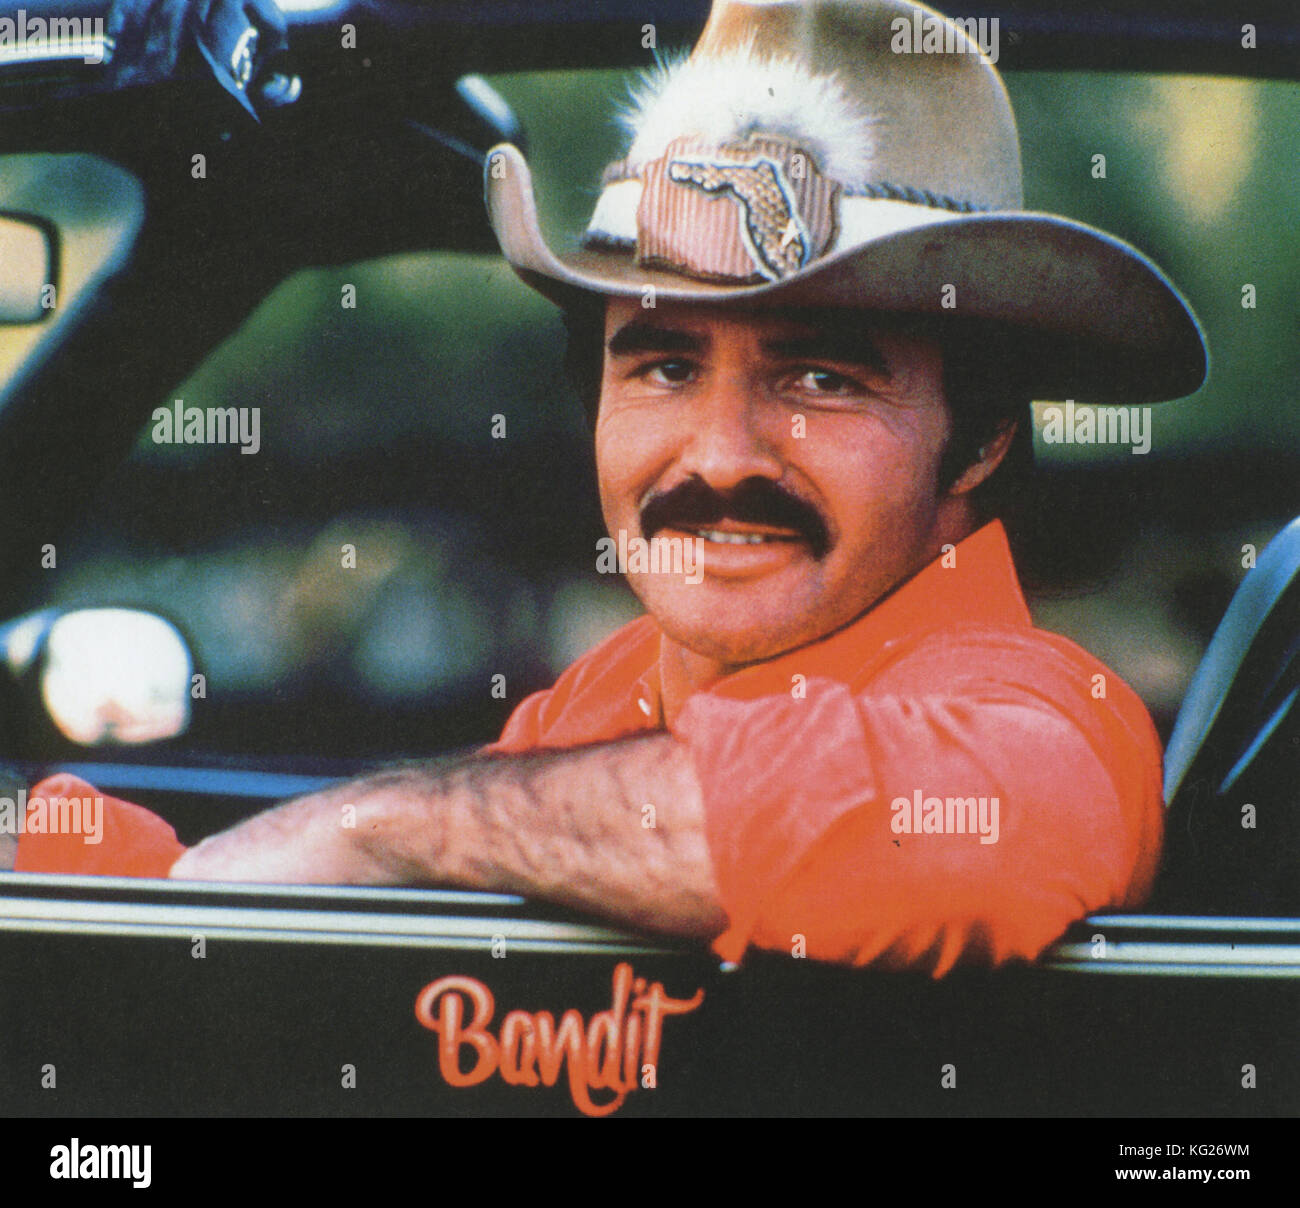 Smokey ET LES BANDITS 1977 Film universel wityh Burt Reynolds Banque D'Images